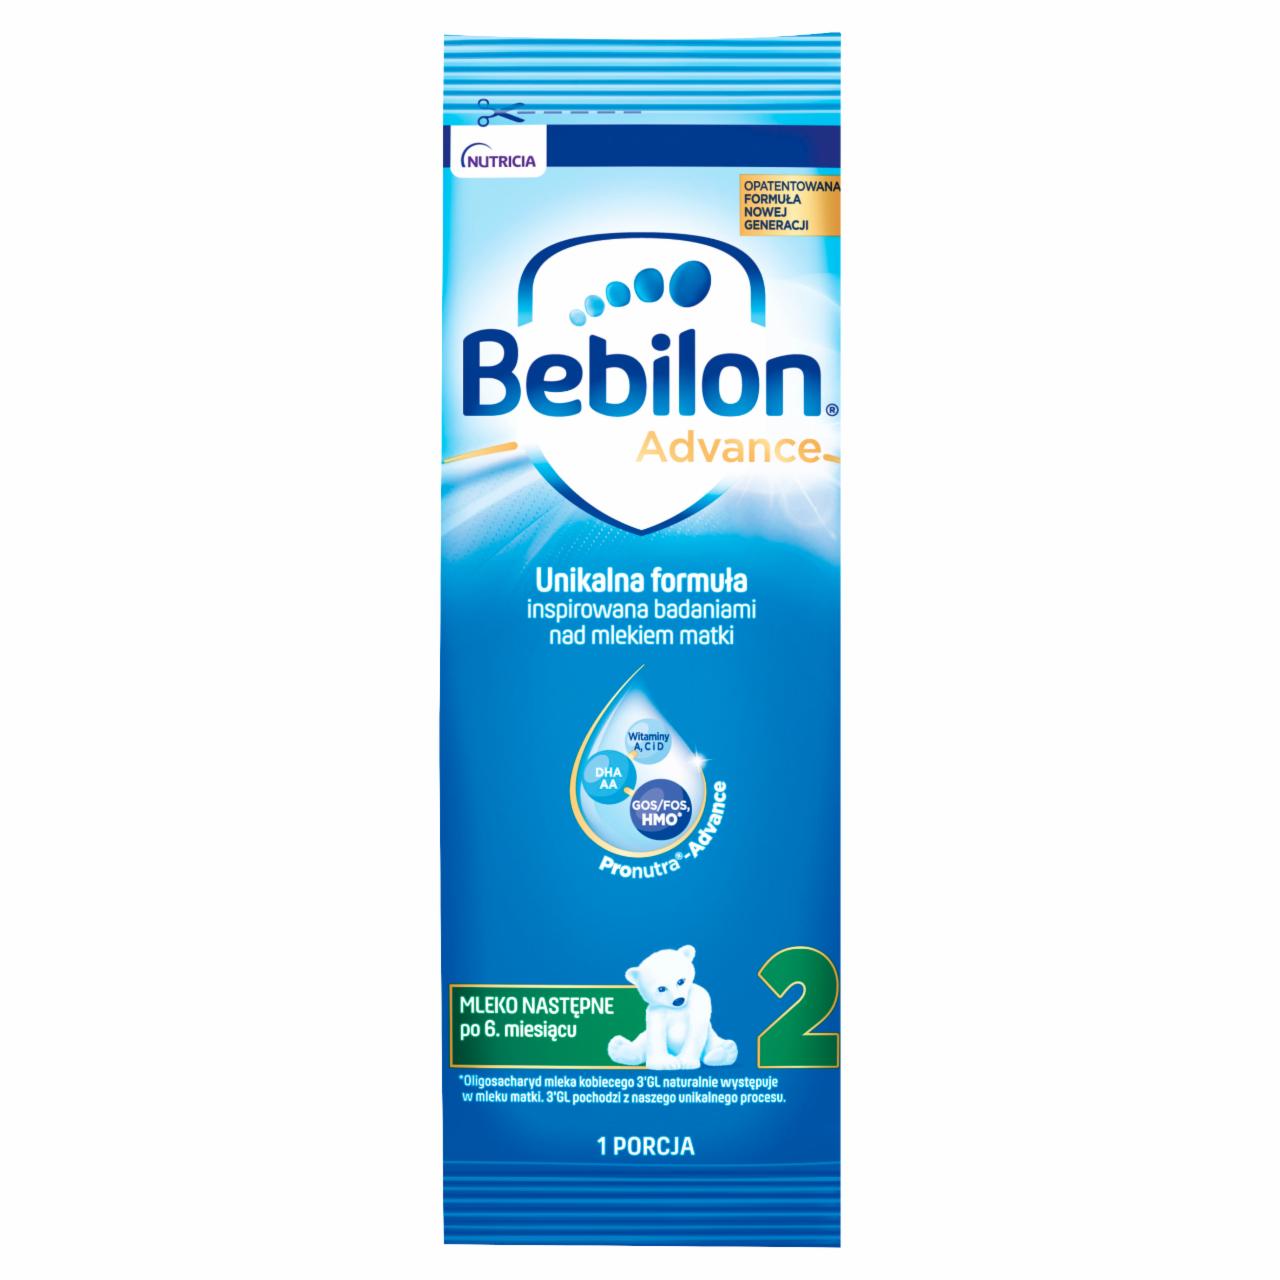 Zdjęcia - Bebilon 2 Pronutra-Advance Mleko następne po 6. miesiącu 29,4 g